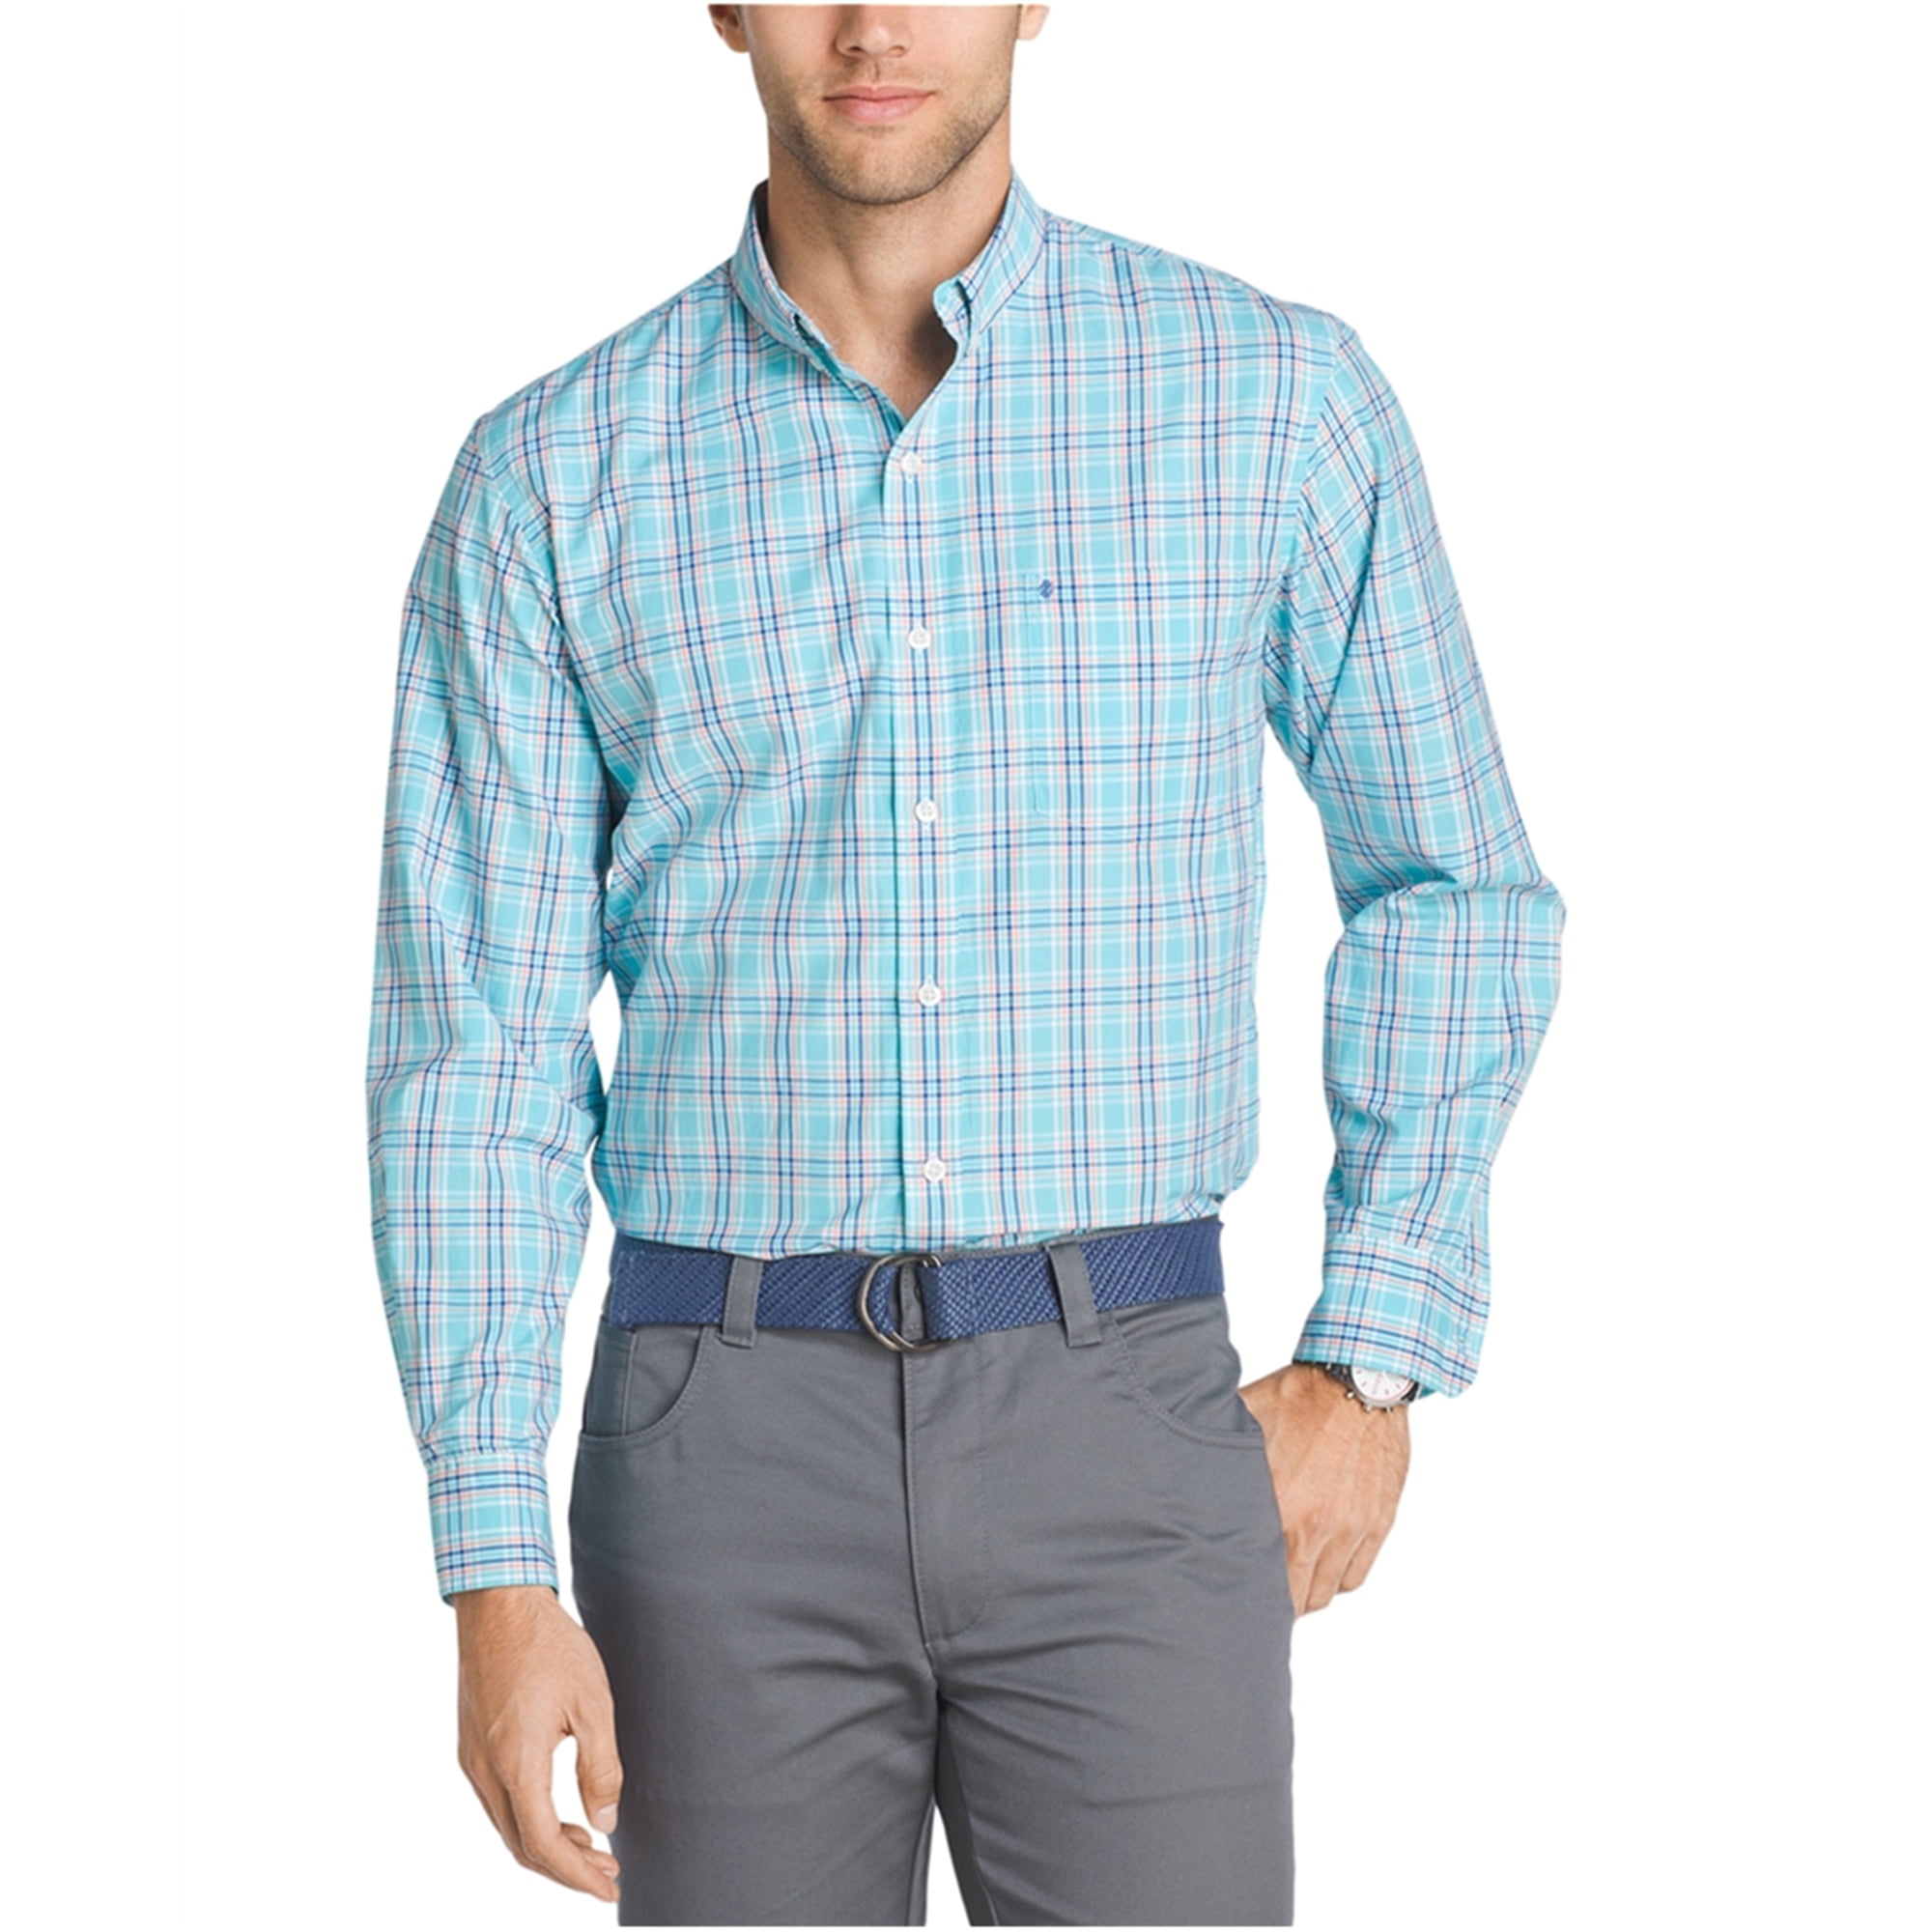 IZOD - izod mens breeze plaid button up shirt - Walmart.com - Walmart.com